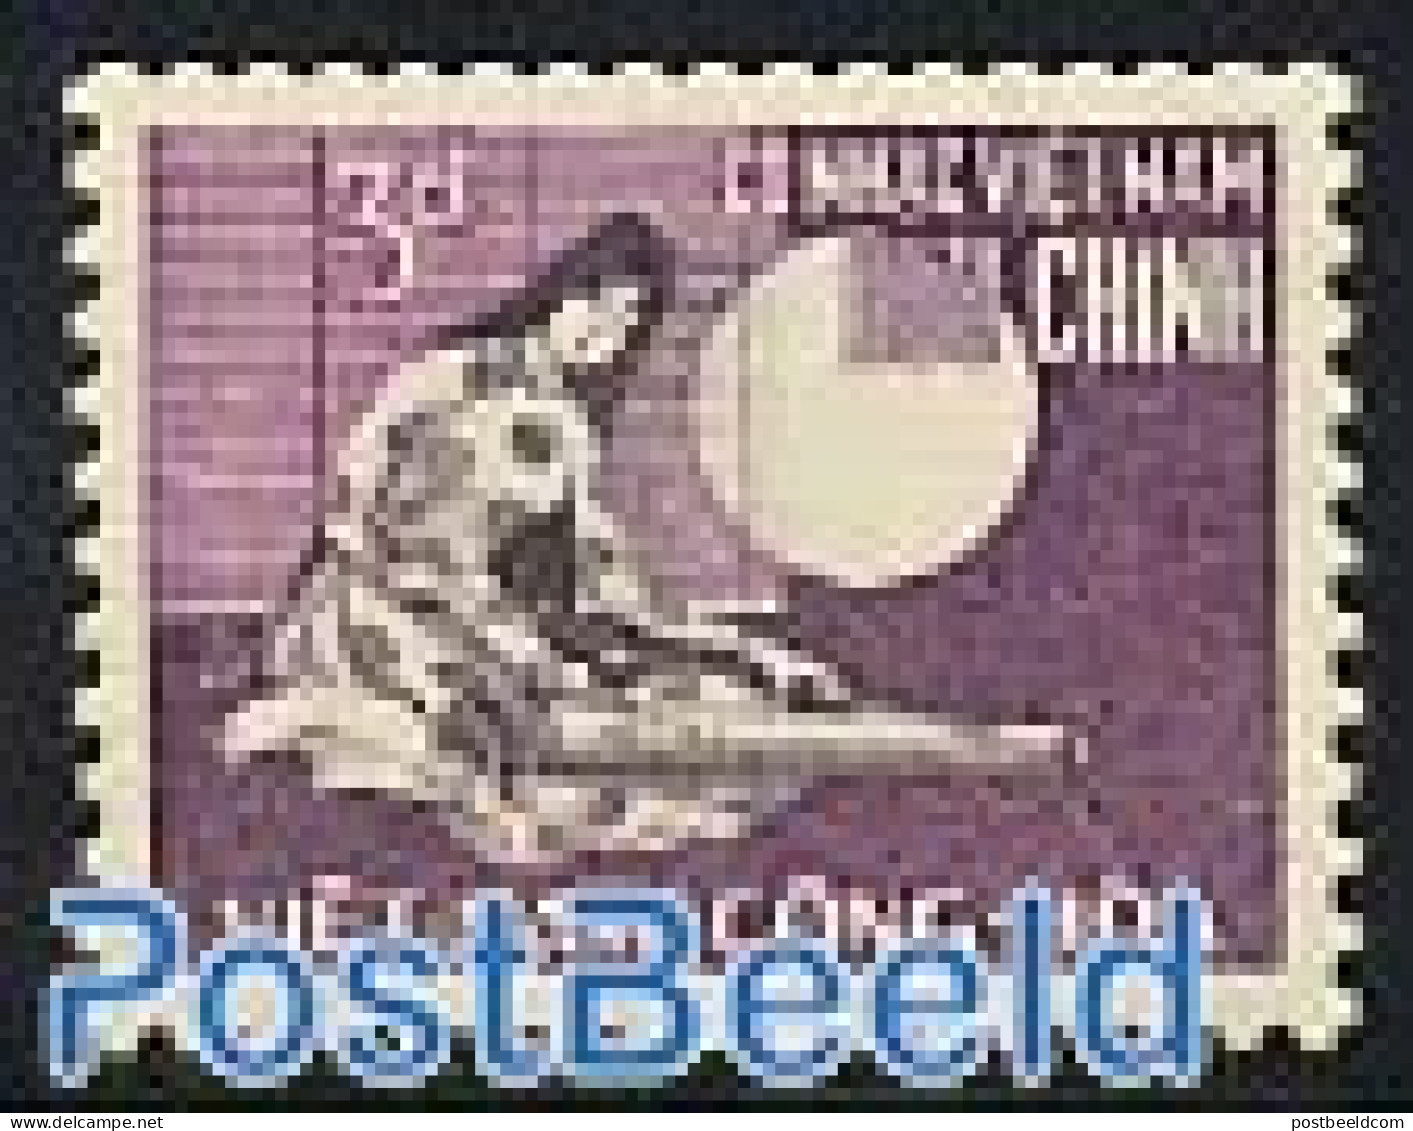 Vietnam, South 1967 Floating Post Office 1v, Mint NH, Post - Posta